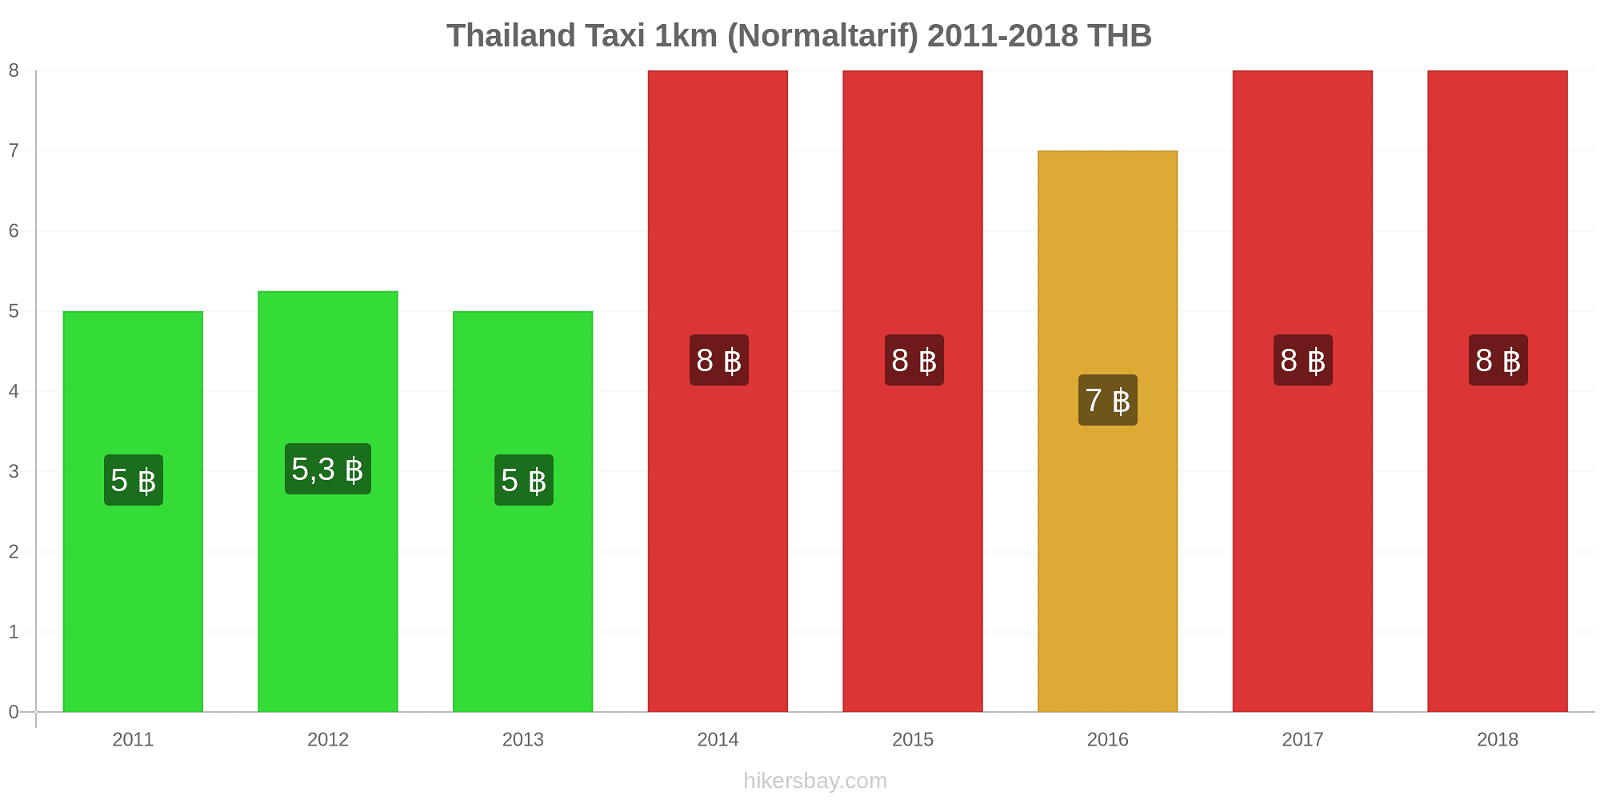 Thailand Preisänderungen Taxi 1km (Normaltarif) hikersbay.com